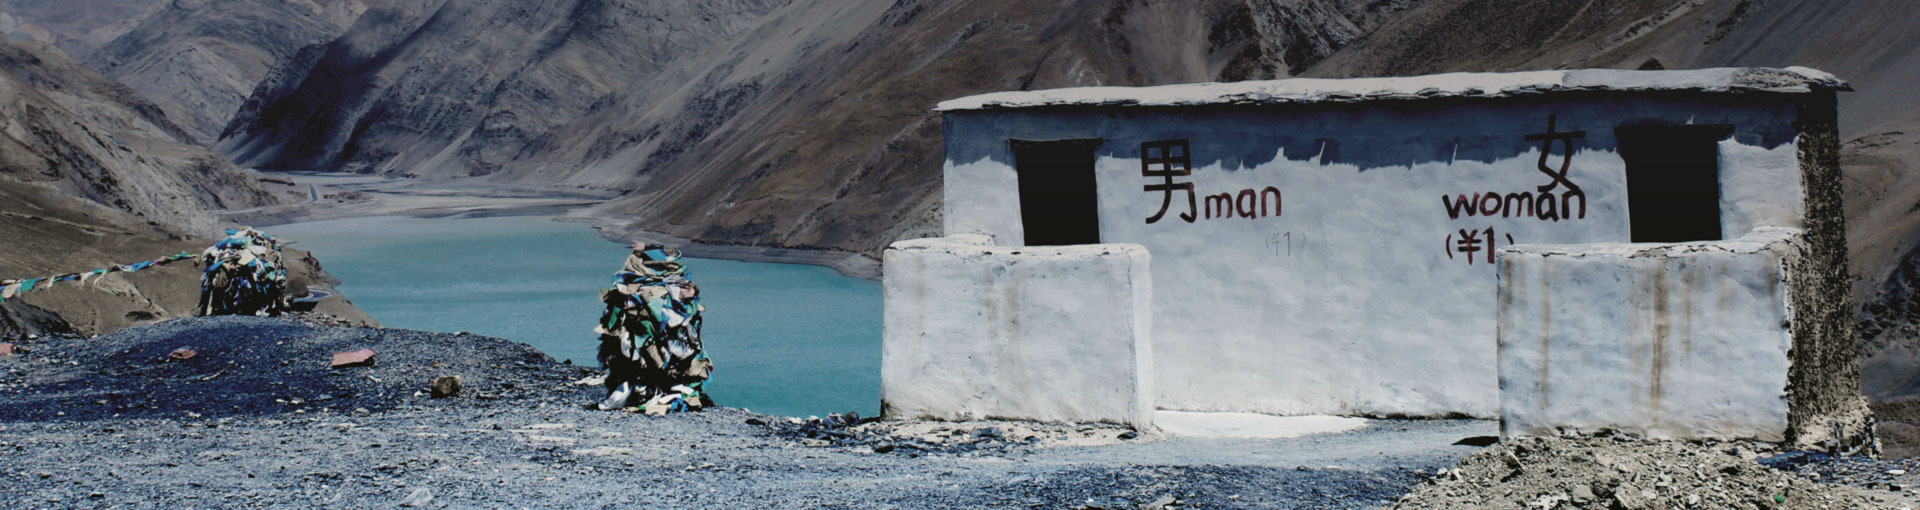 Tibet toilet lake element film